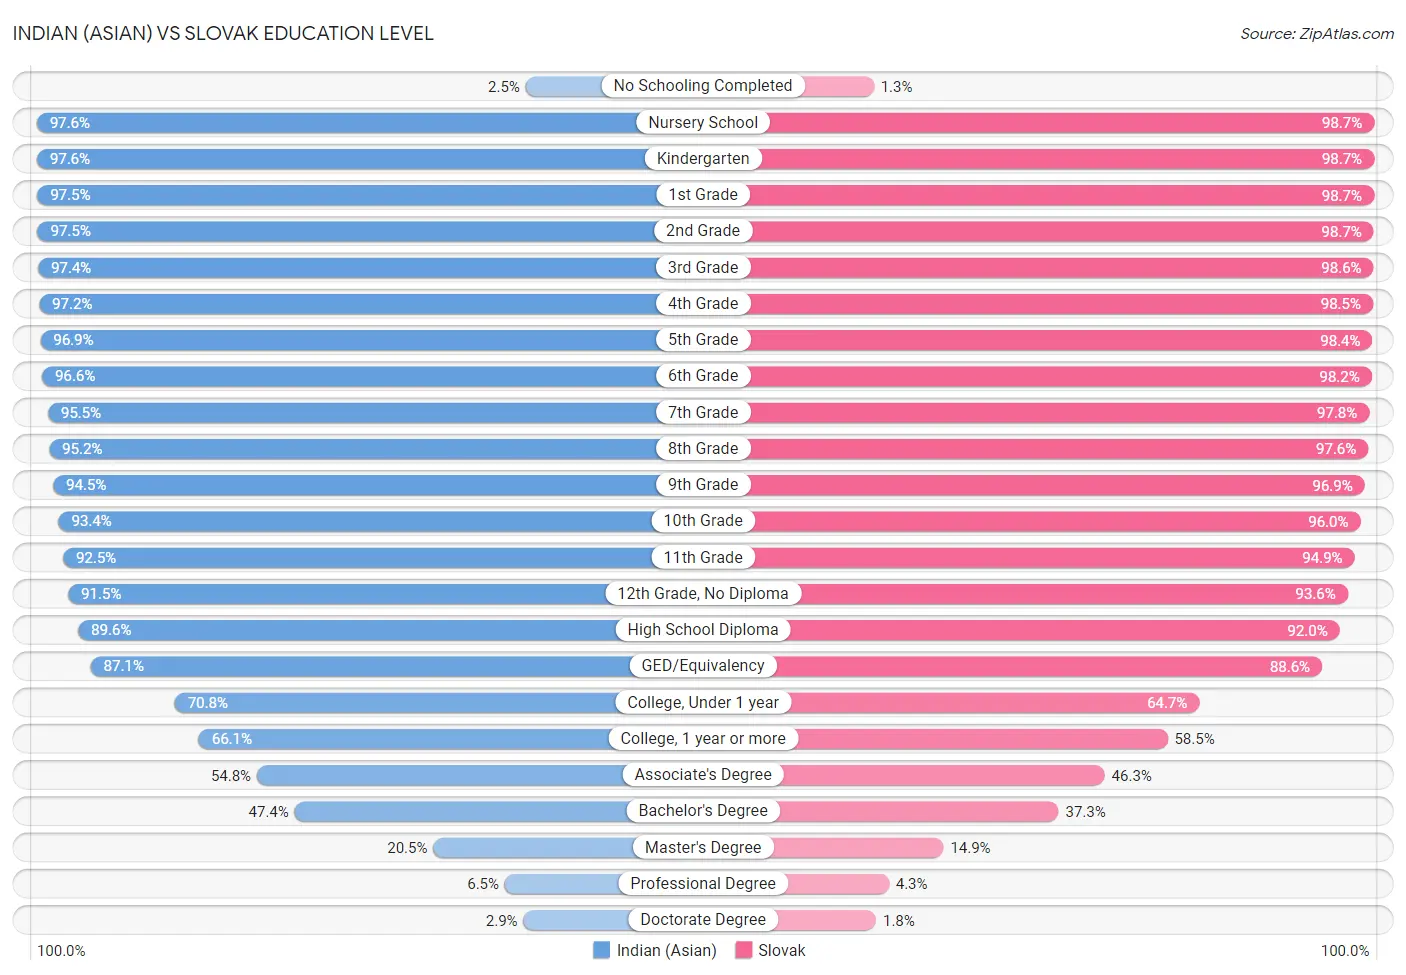 Indian (Asian) vs Slovak Education Level